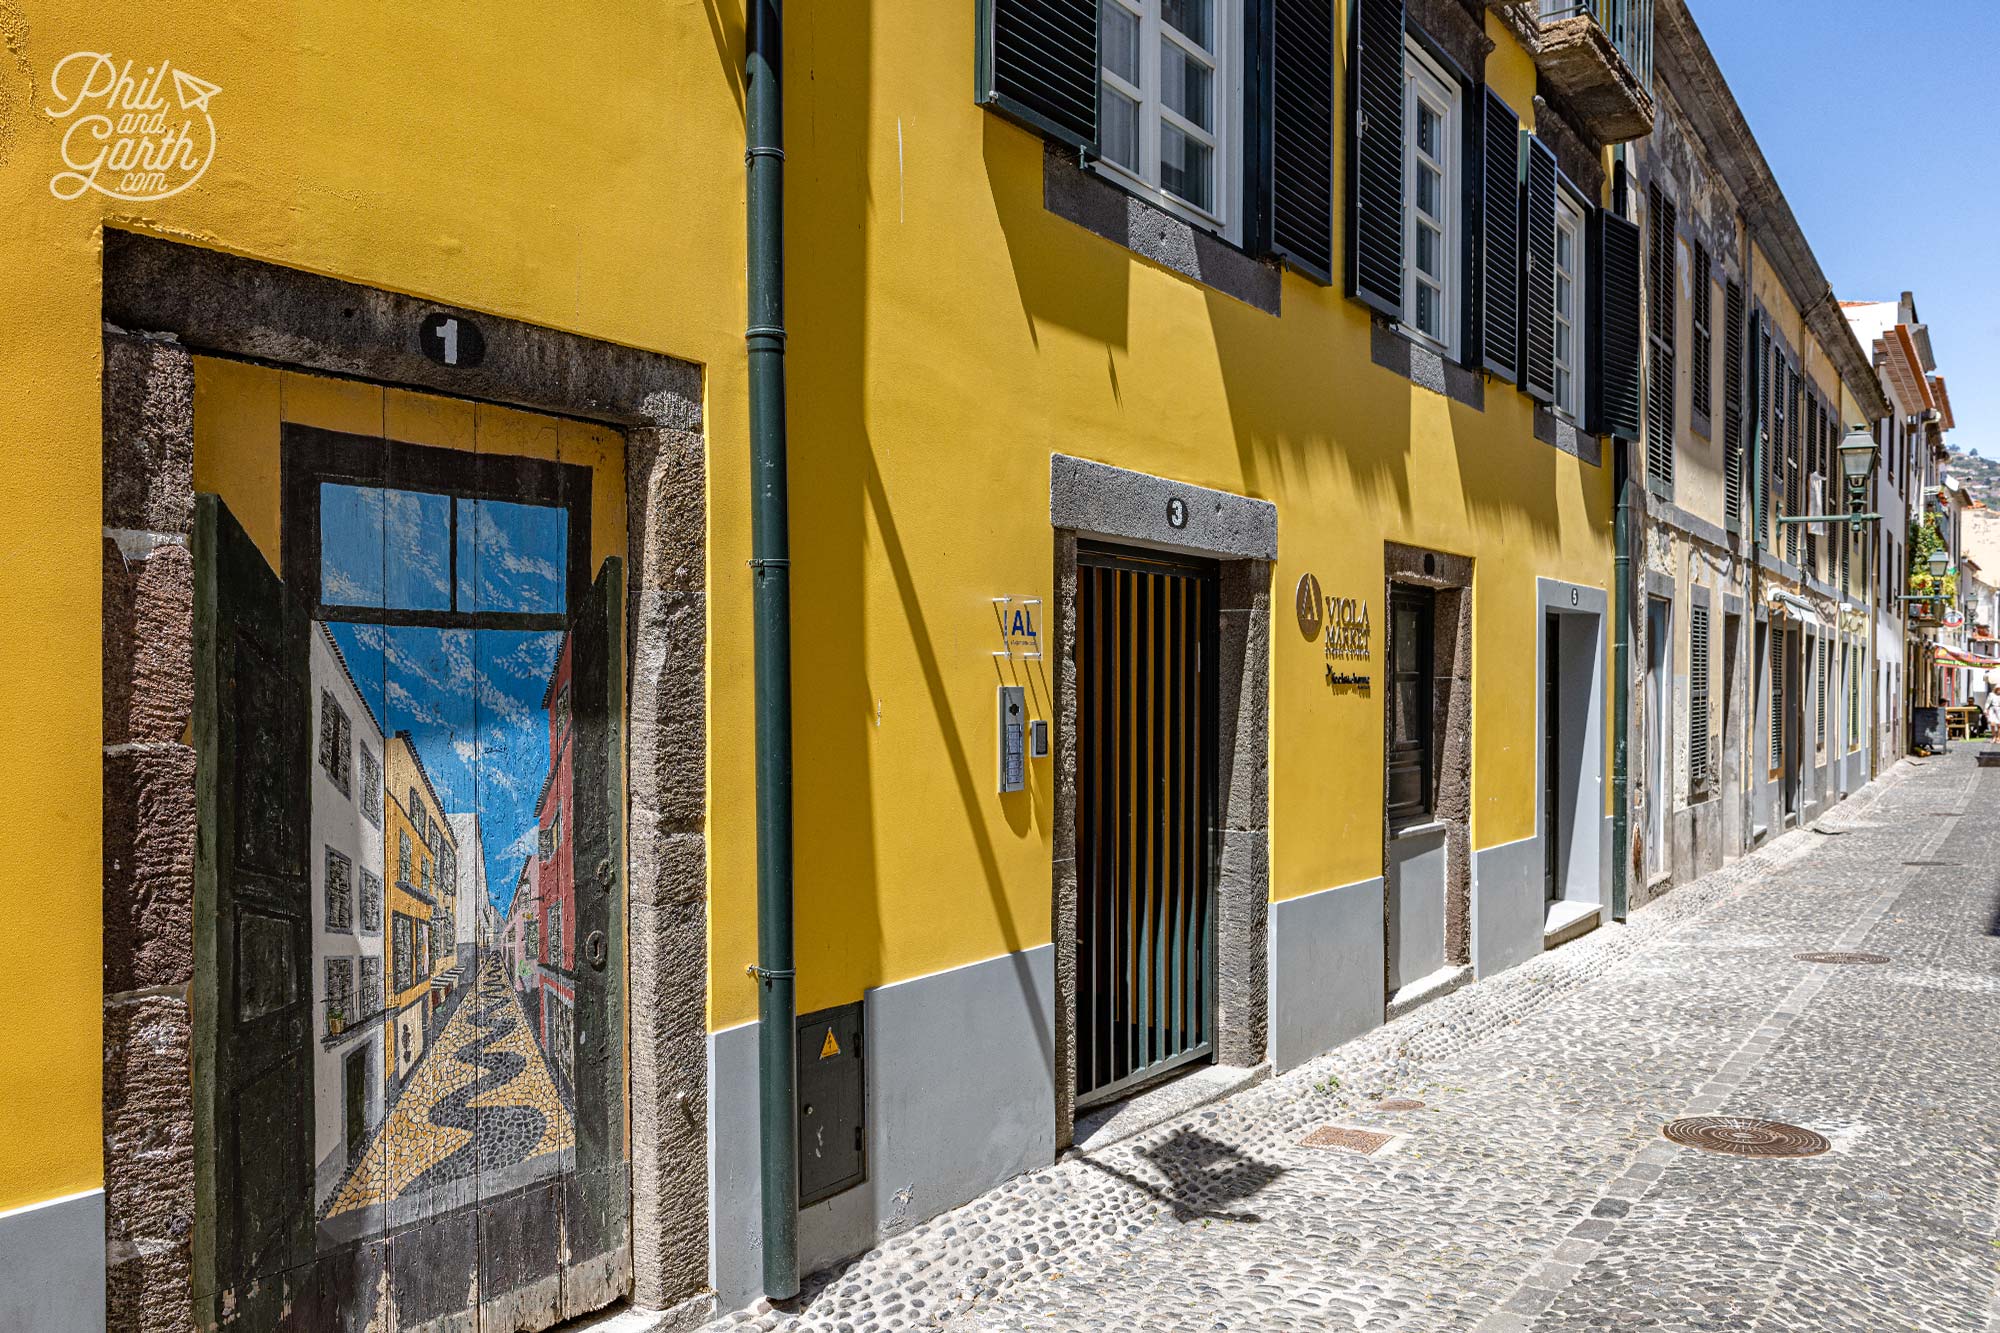 200 painted doors line the streets of Rua Santa Maria